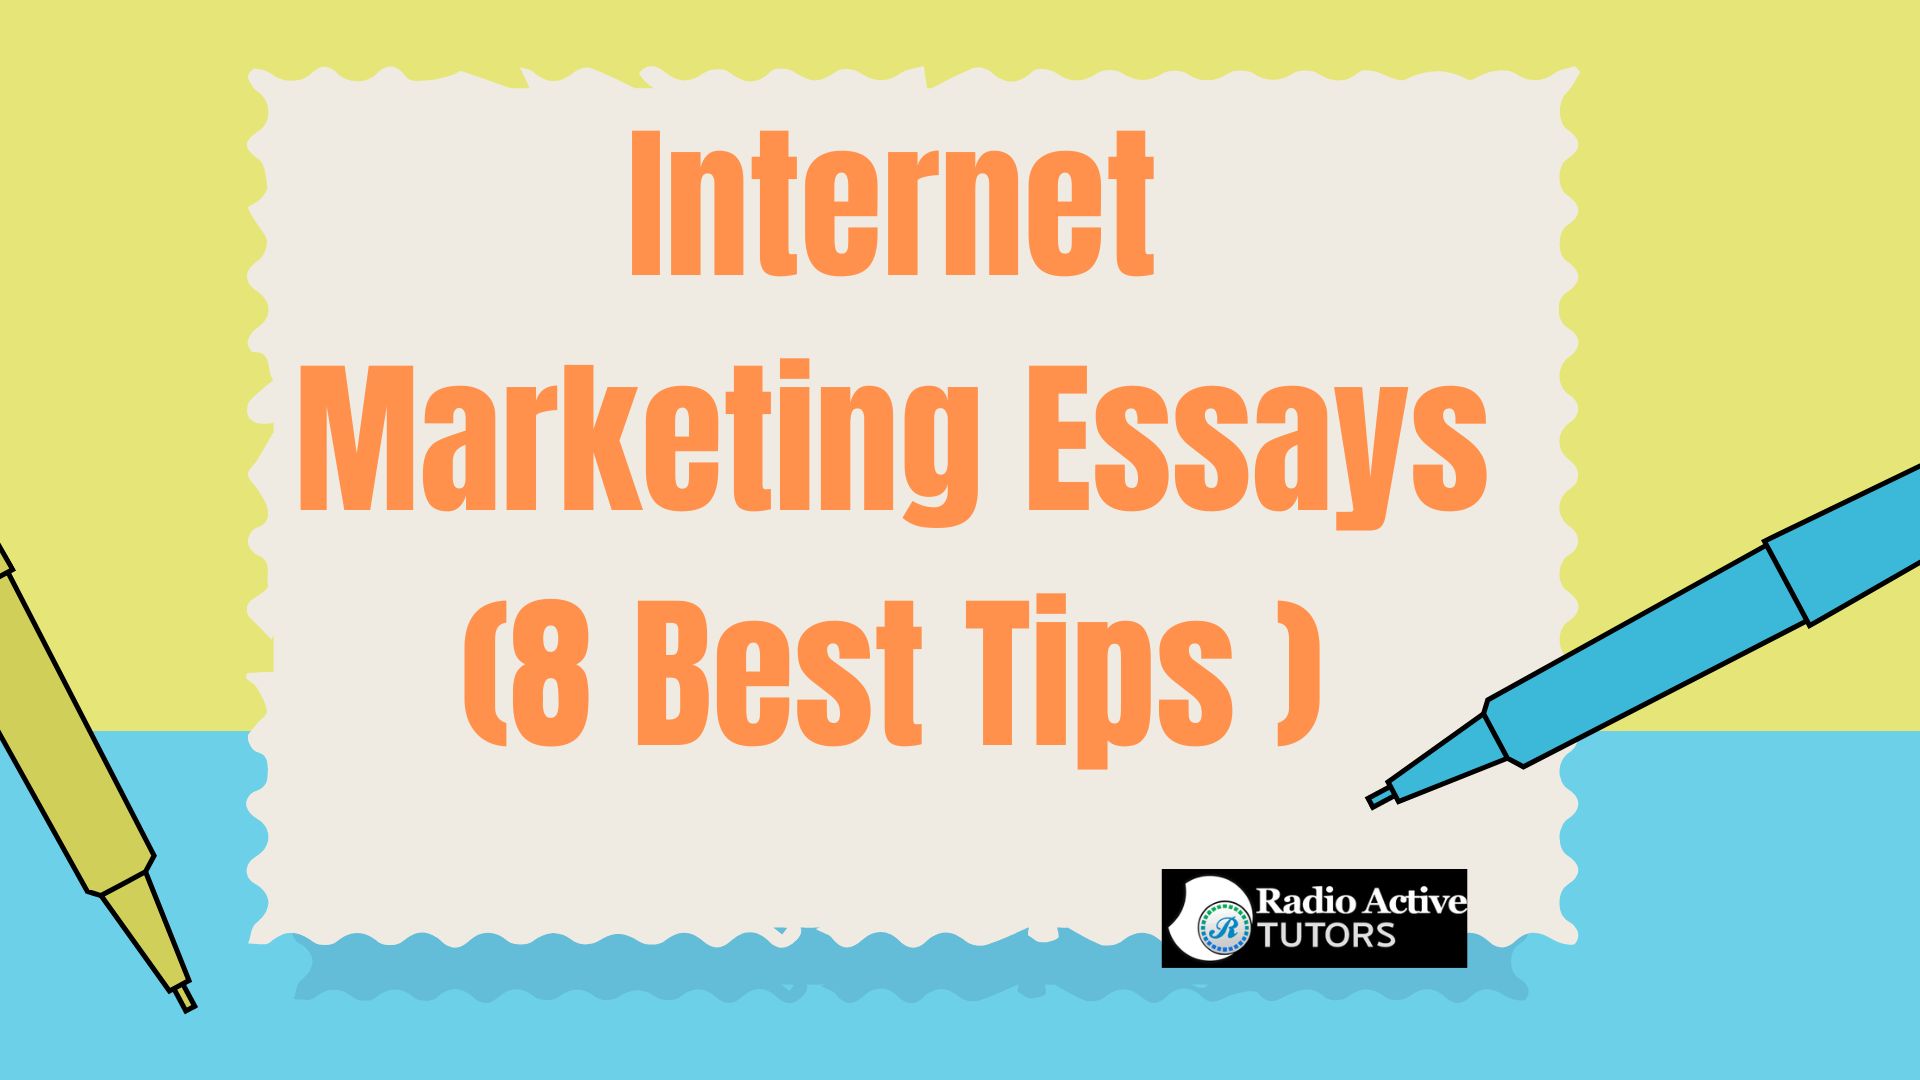 Internet Marketing Essays (8 Best Tips )